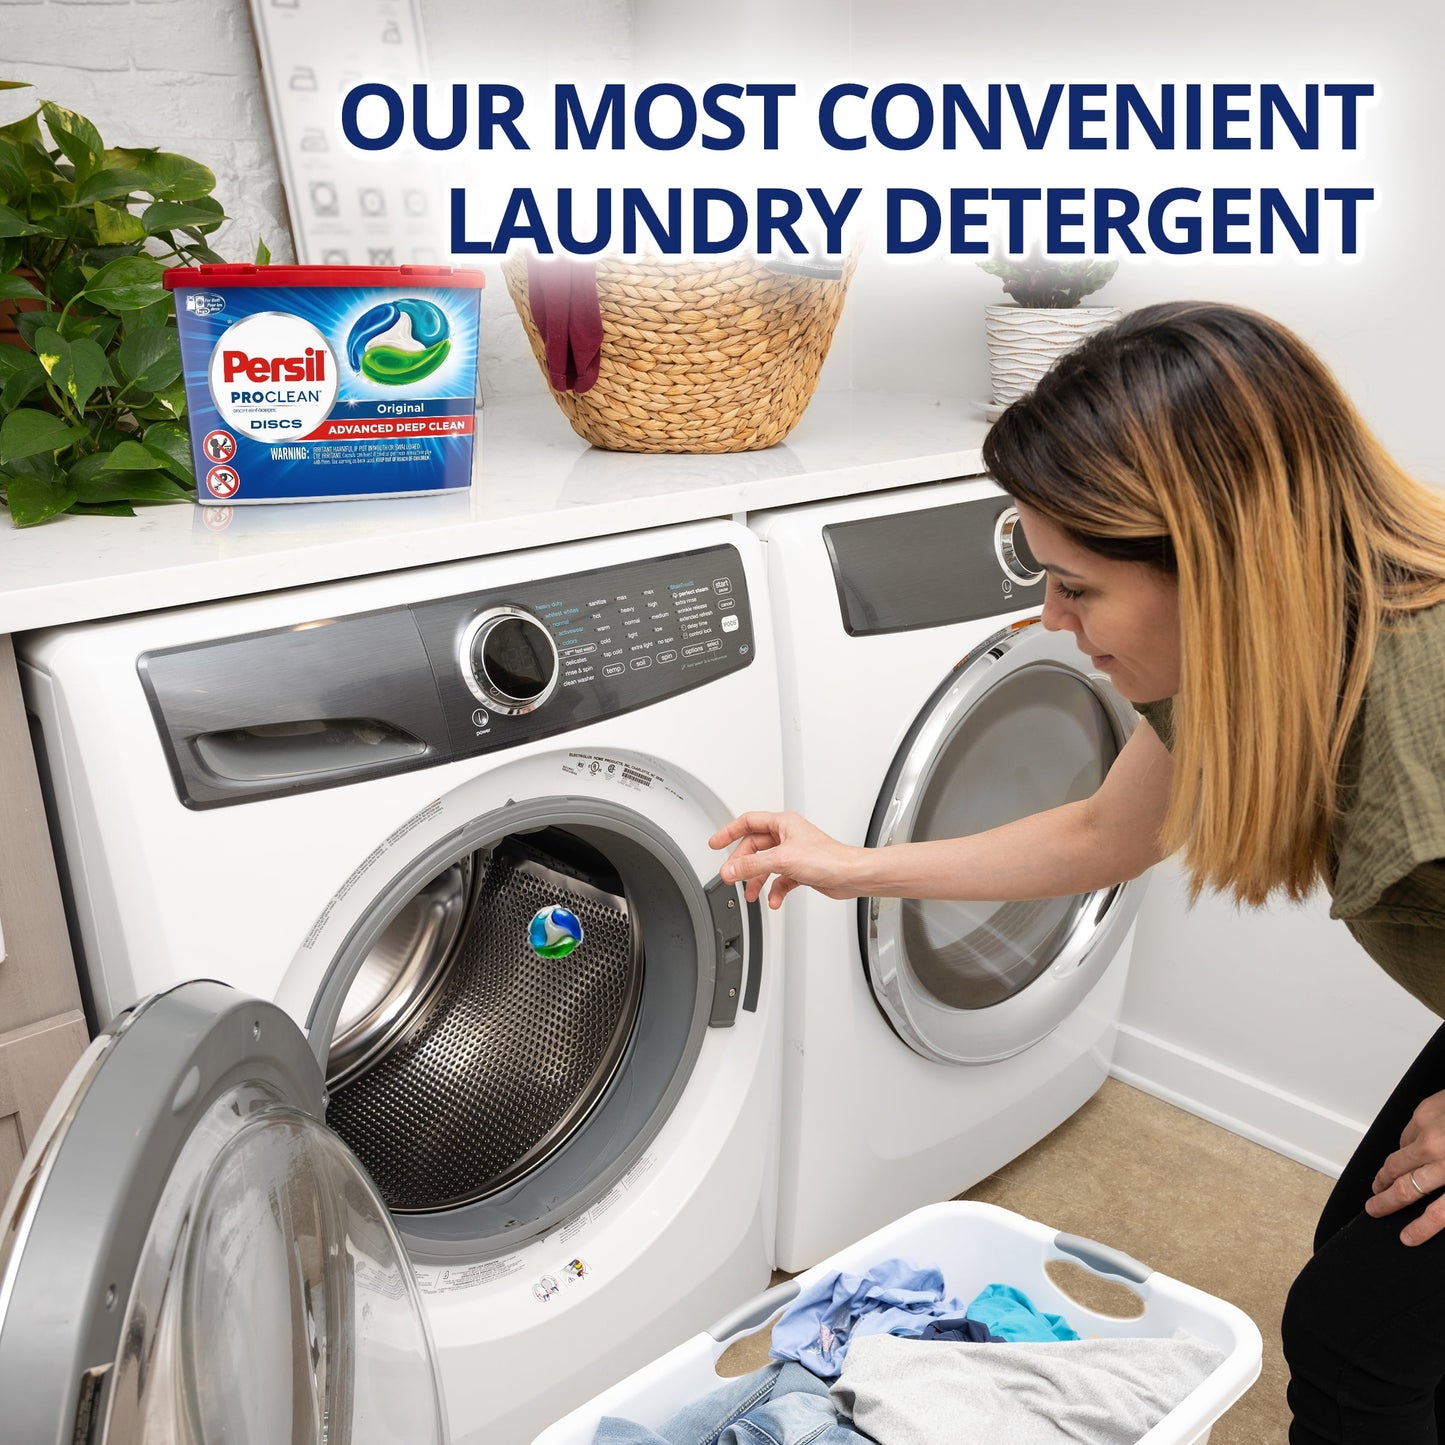 Persil Discs Laundry Detergent Pacs, Original, 62 Count